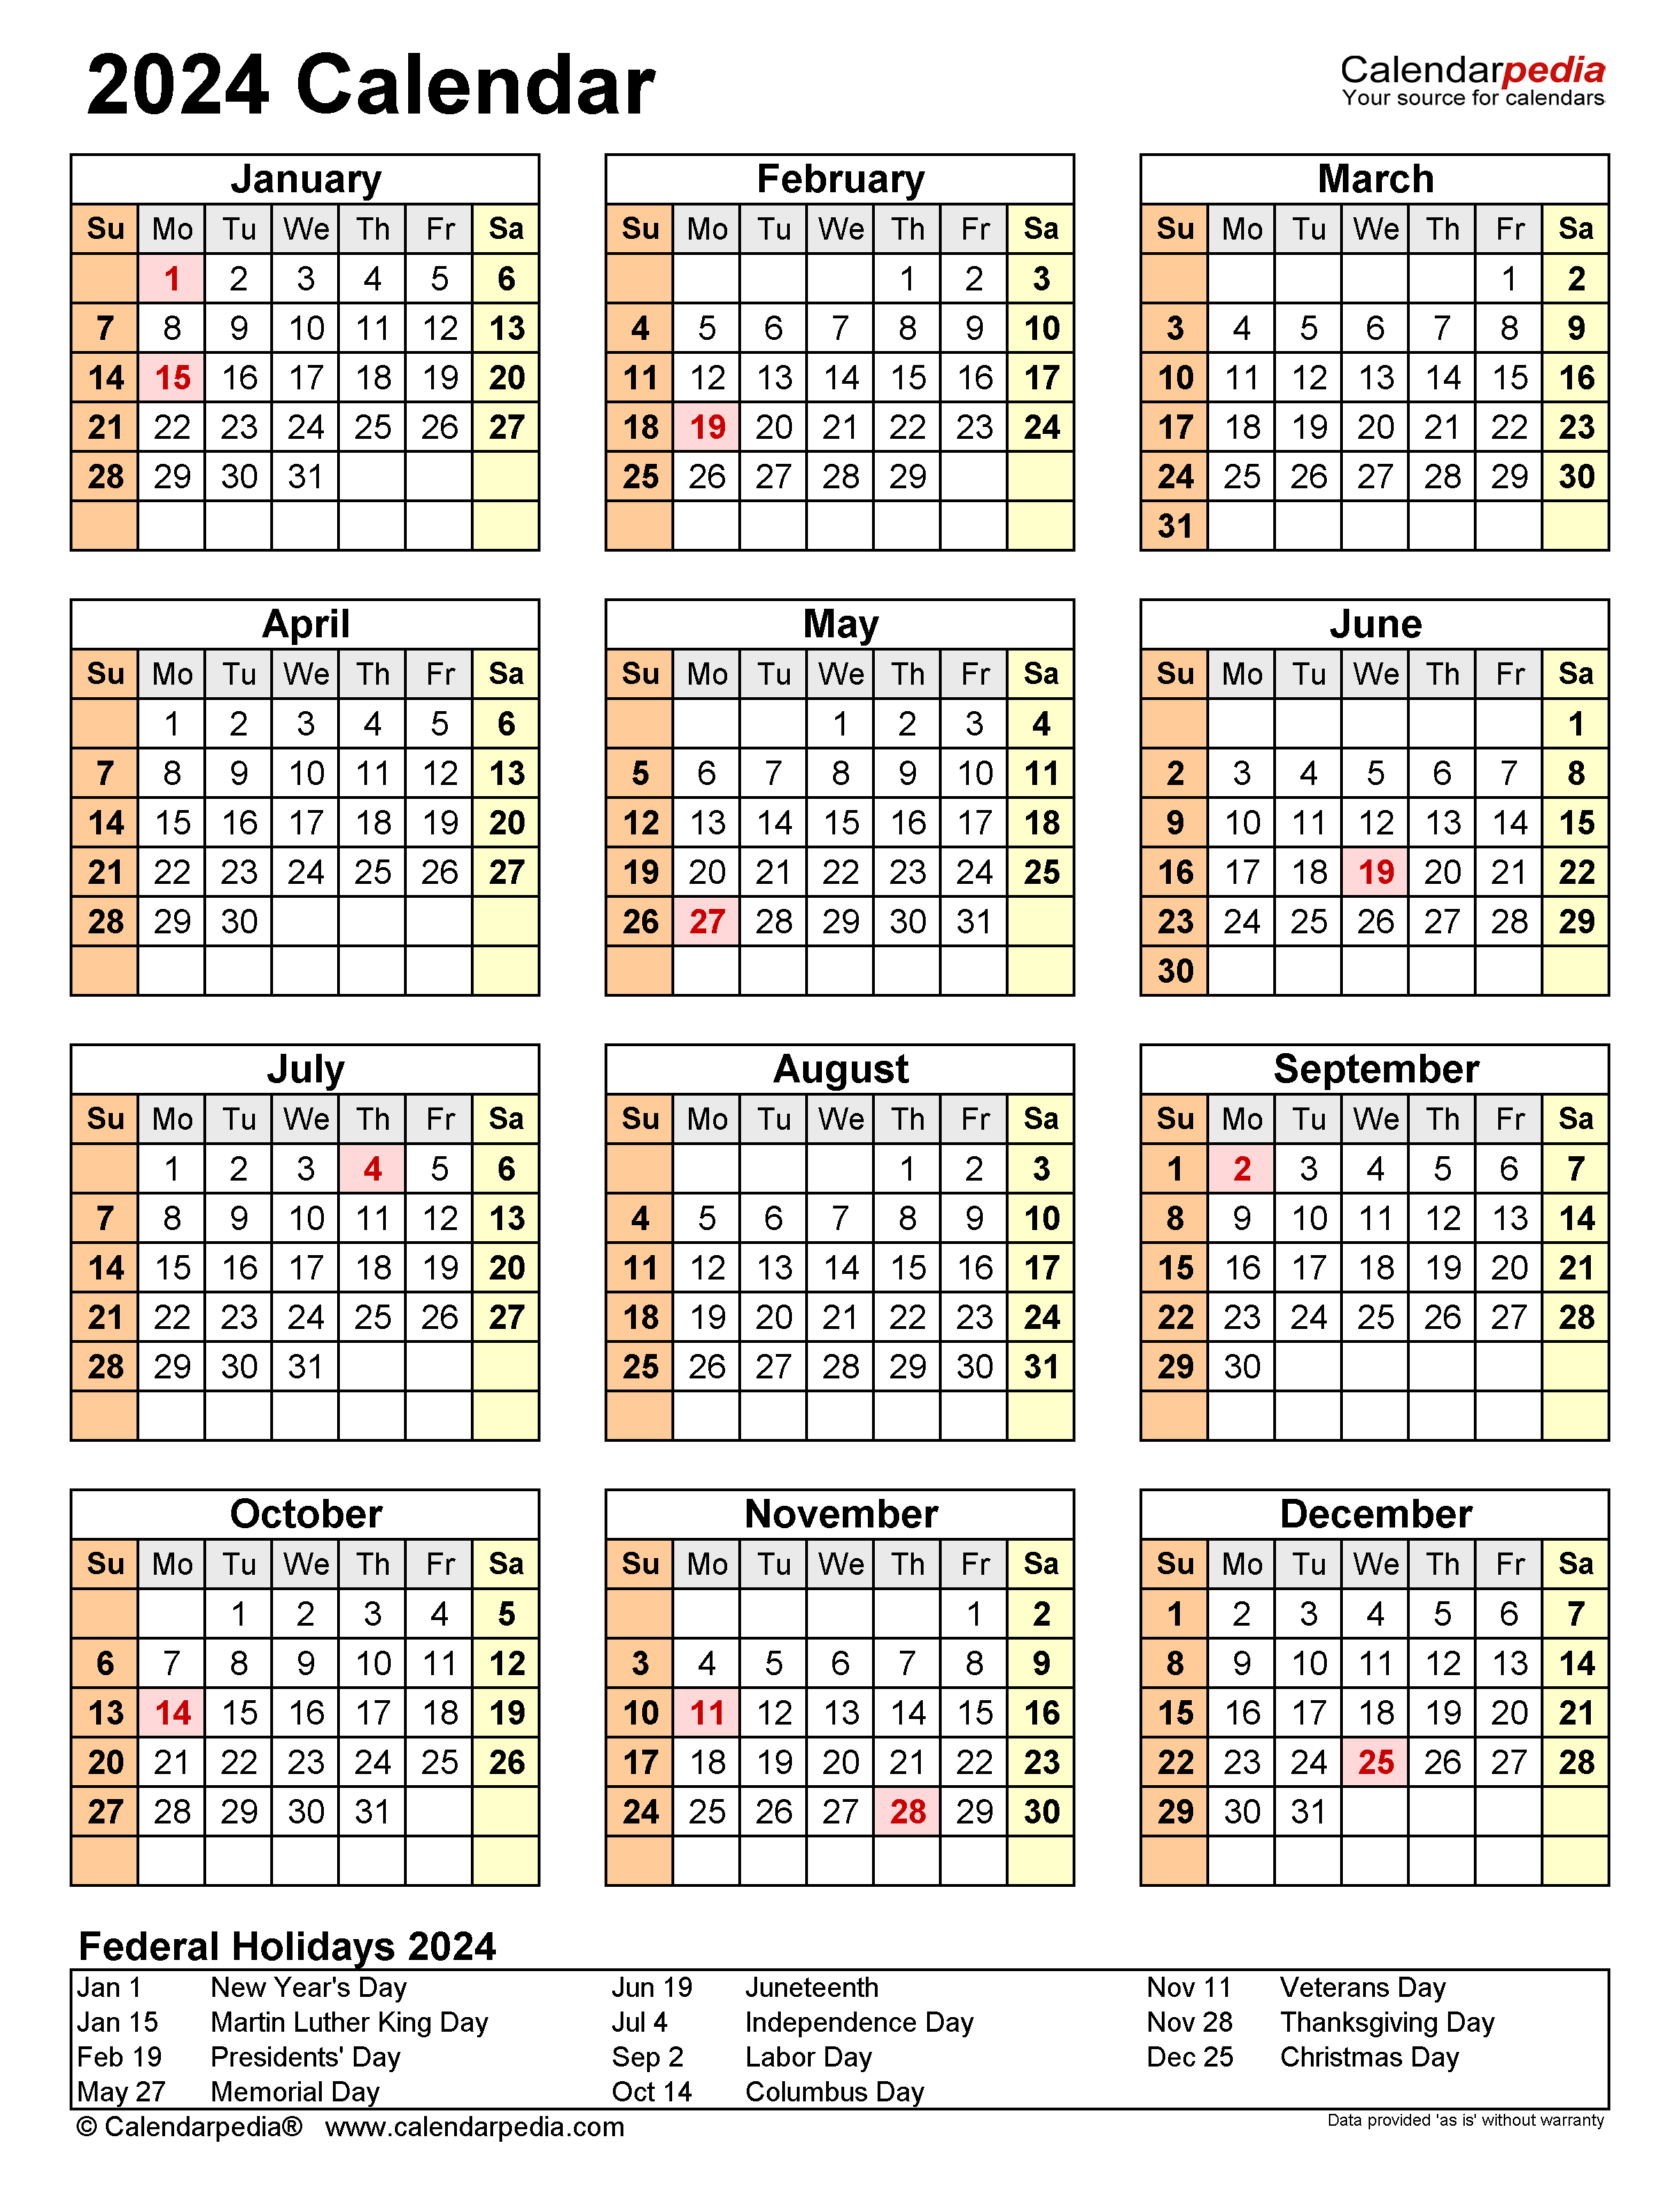 Free Printable 2024 Calendar With Holidays Crownflourmills | Free Printable 2024 Calendar With Holidays